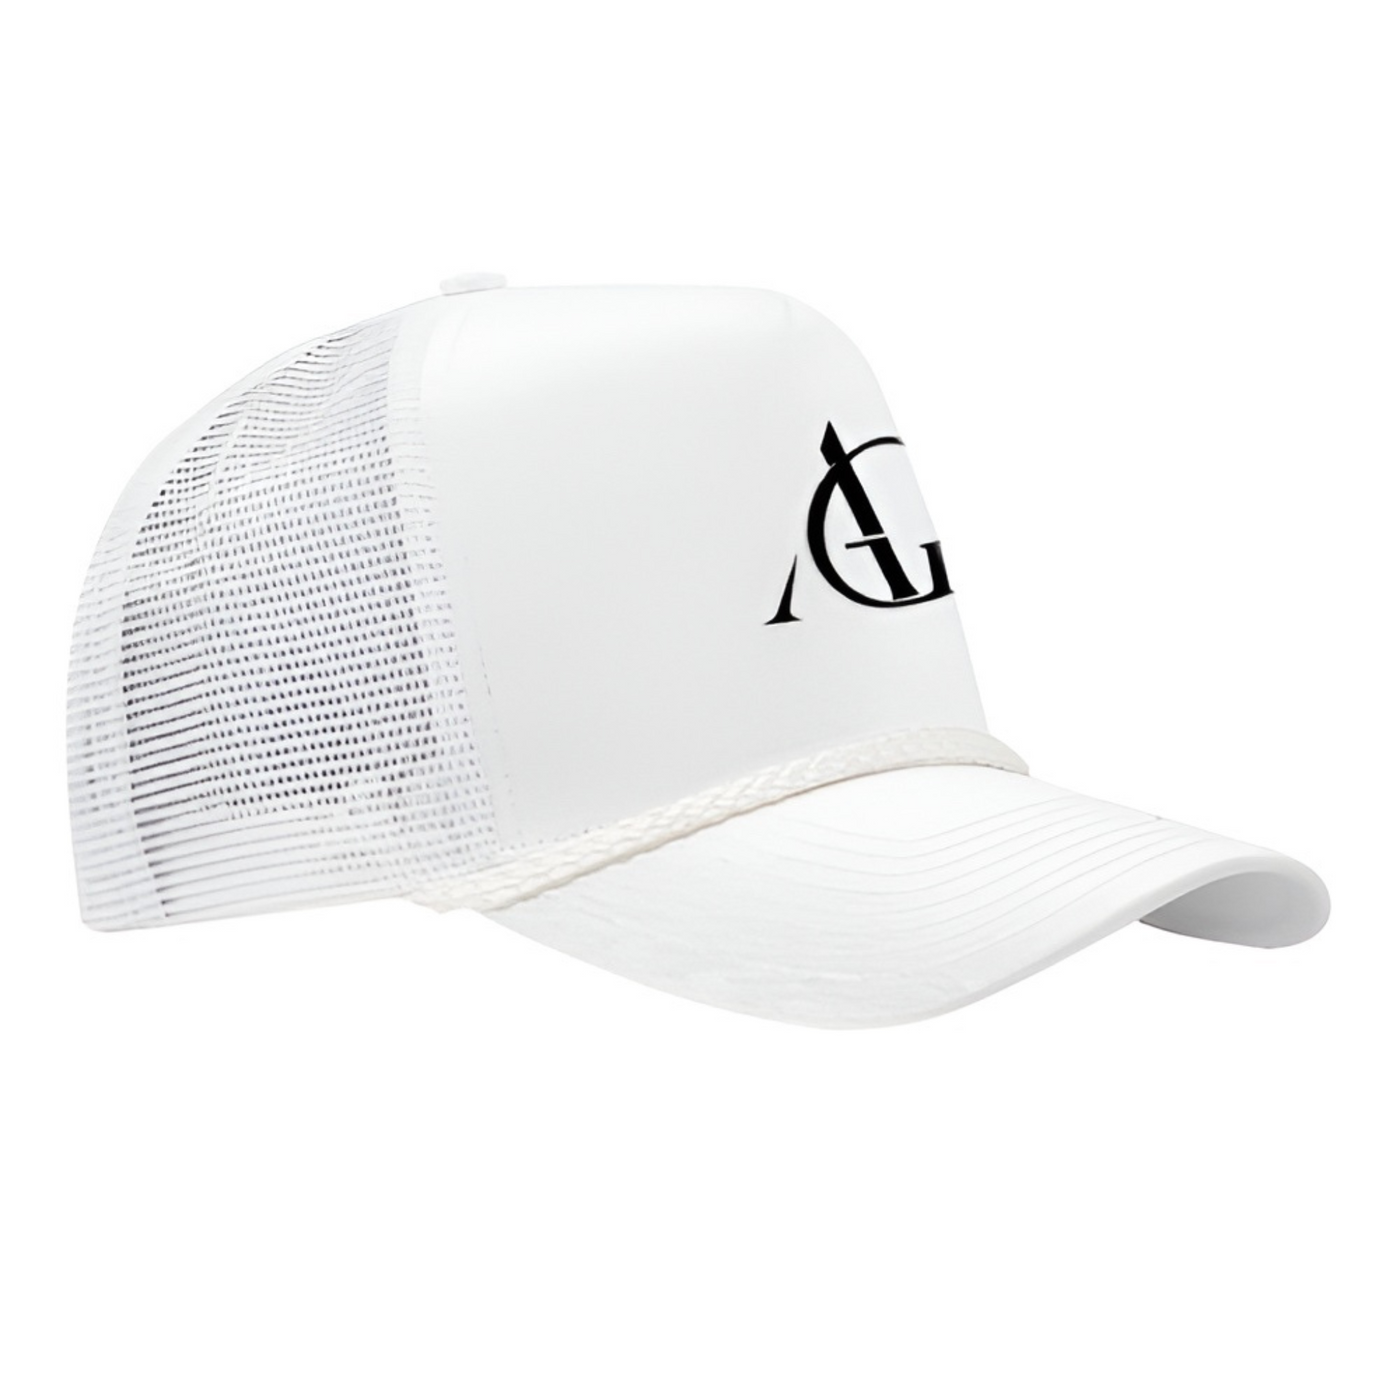 Austin Giorgio Corded Trucker Hat - White